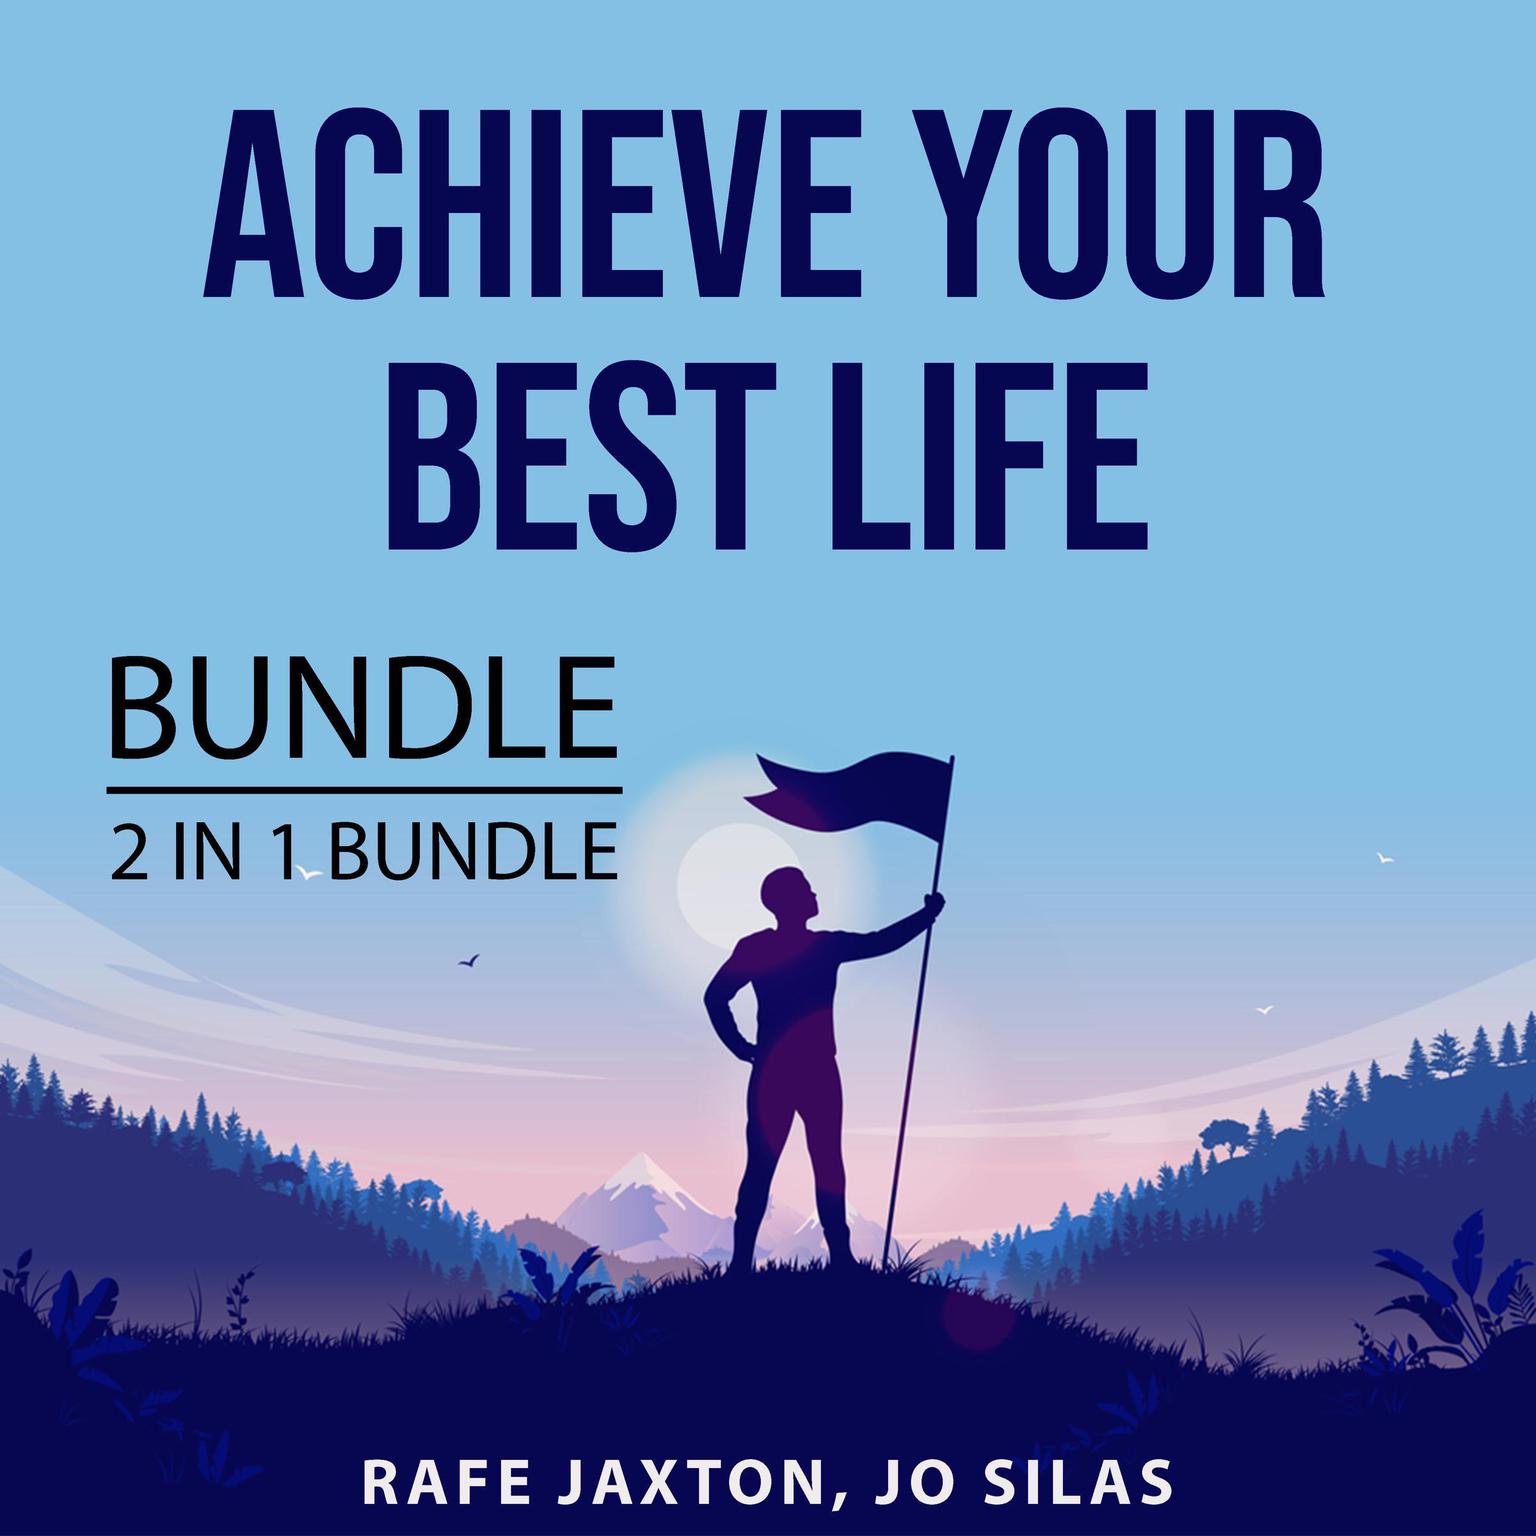 Achieve Your Best Life Bundle, 2 in 1 Bundle: Create Your Best Life and The Achievement Habit: Create Your Best Life and The Achievement Habit  Audiobook, by Rafe Jaxton